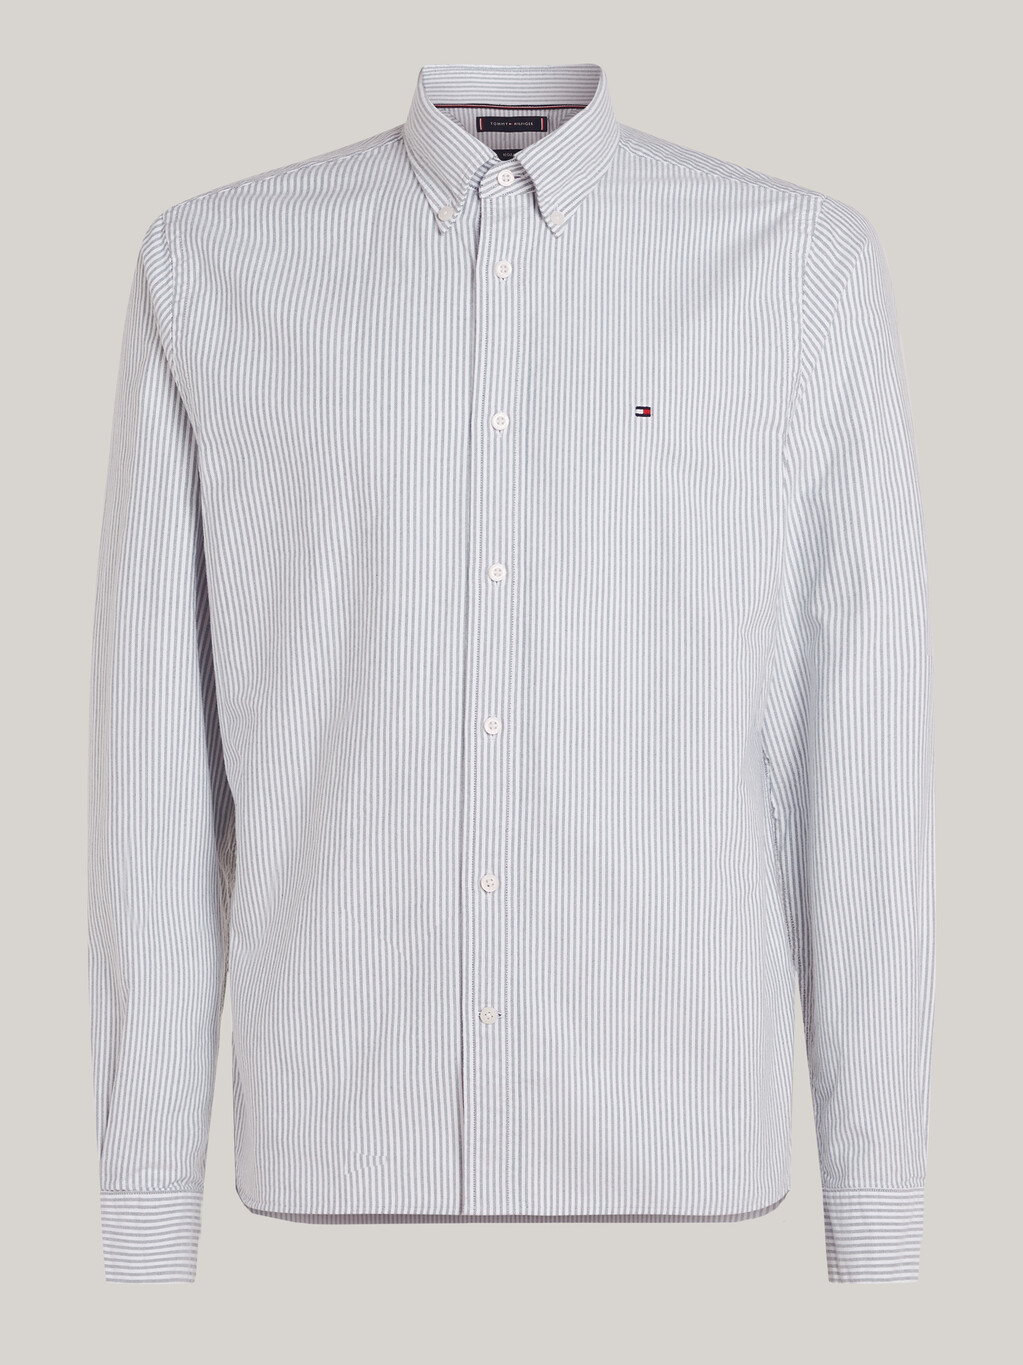 Heritage Stripe Regular Fit Oxford Shirt, Ornamental Green / Optic White, hi-res